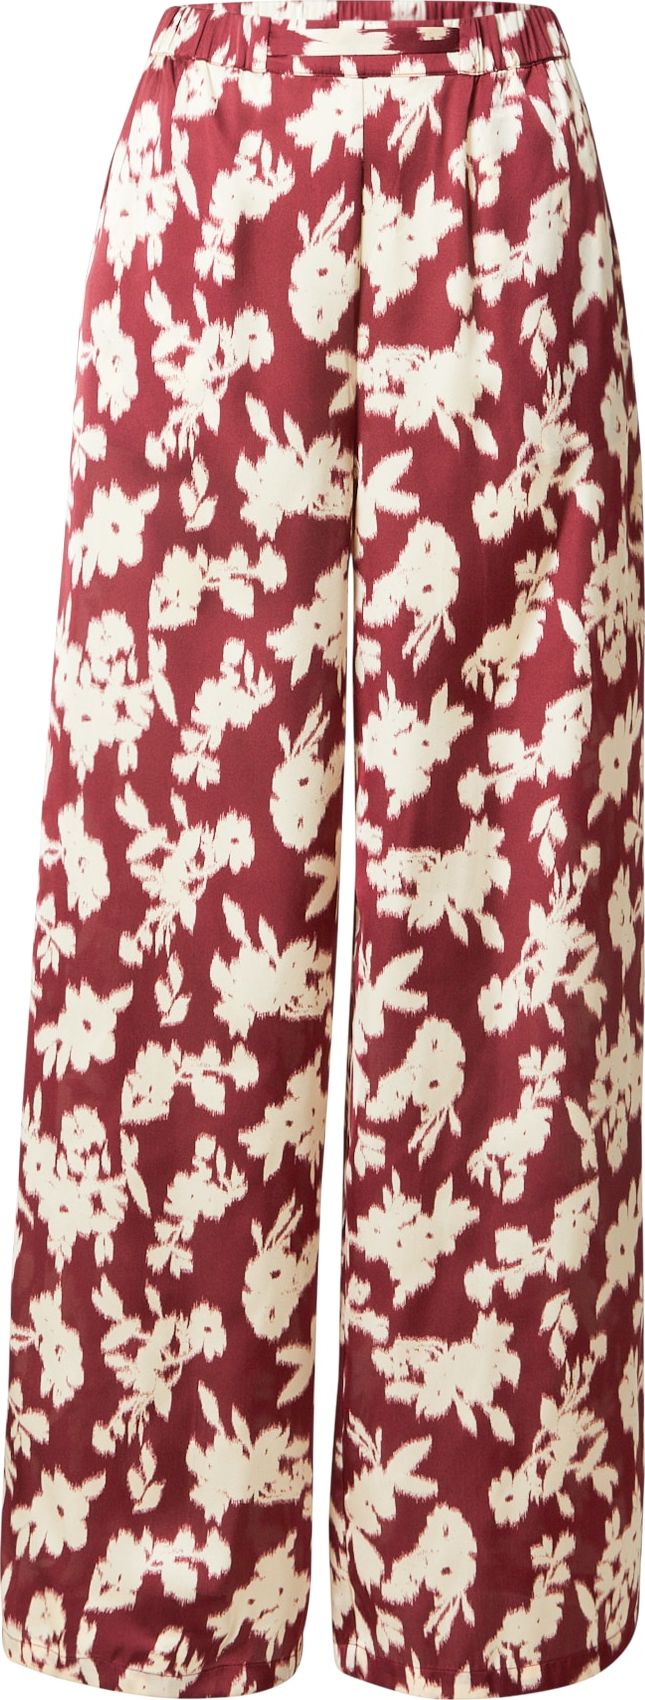 Guido Maria Kretschmer Collection Kalhoty 'Maike' karmínově červené / bílá